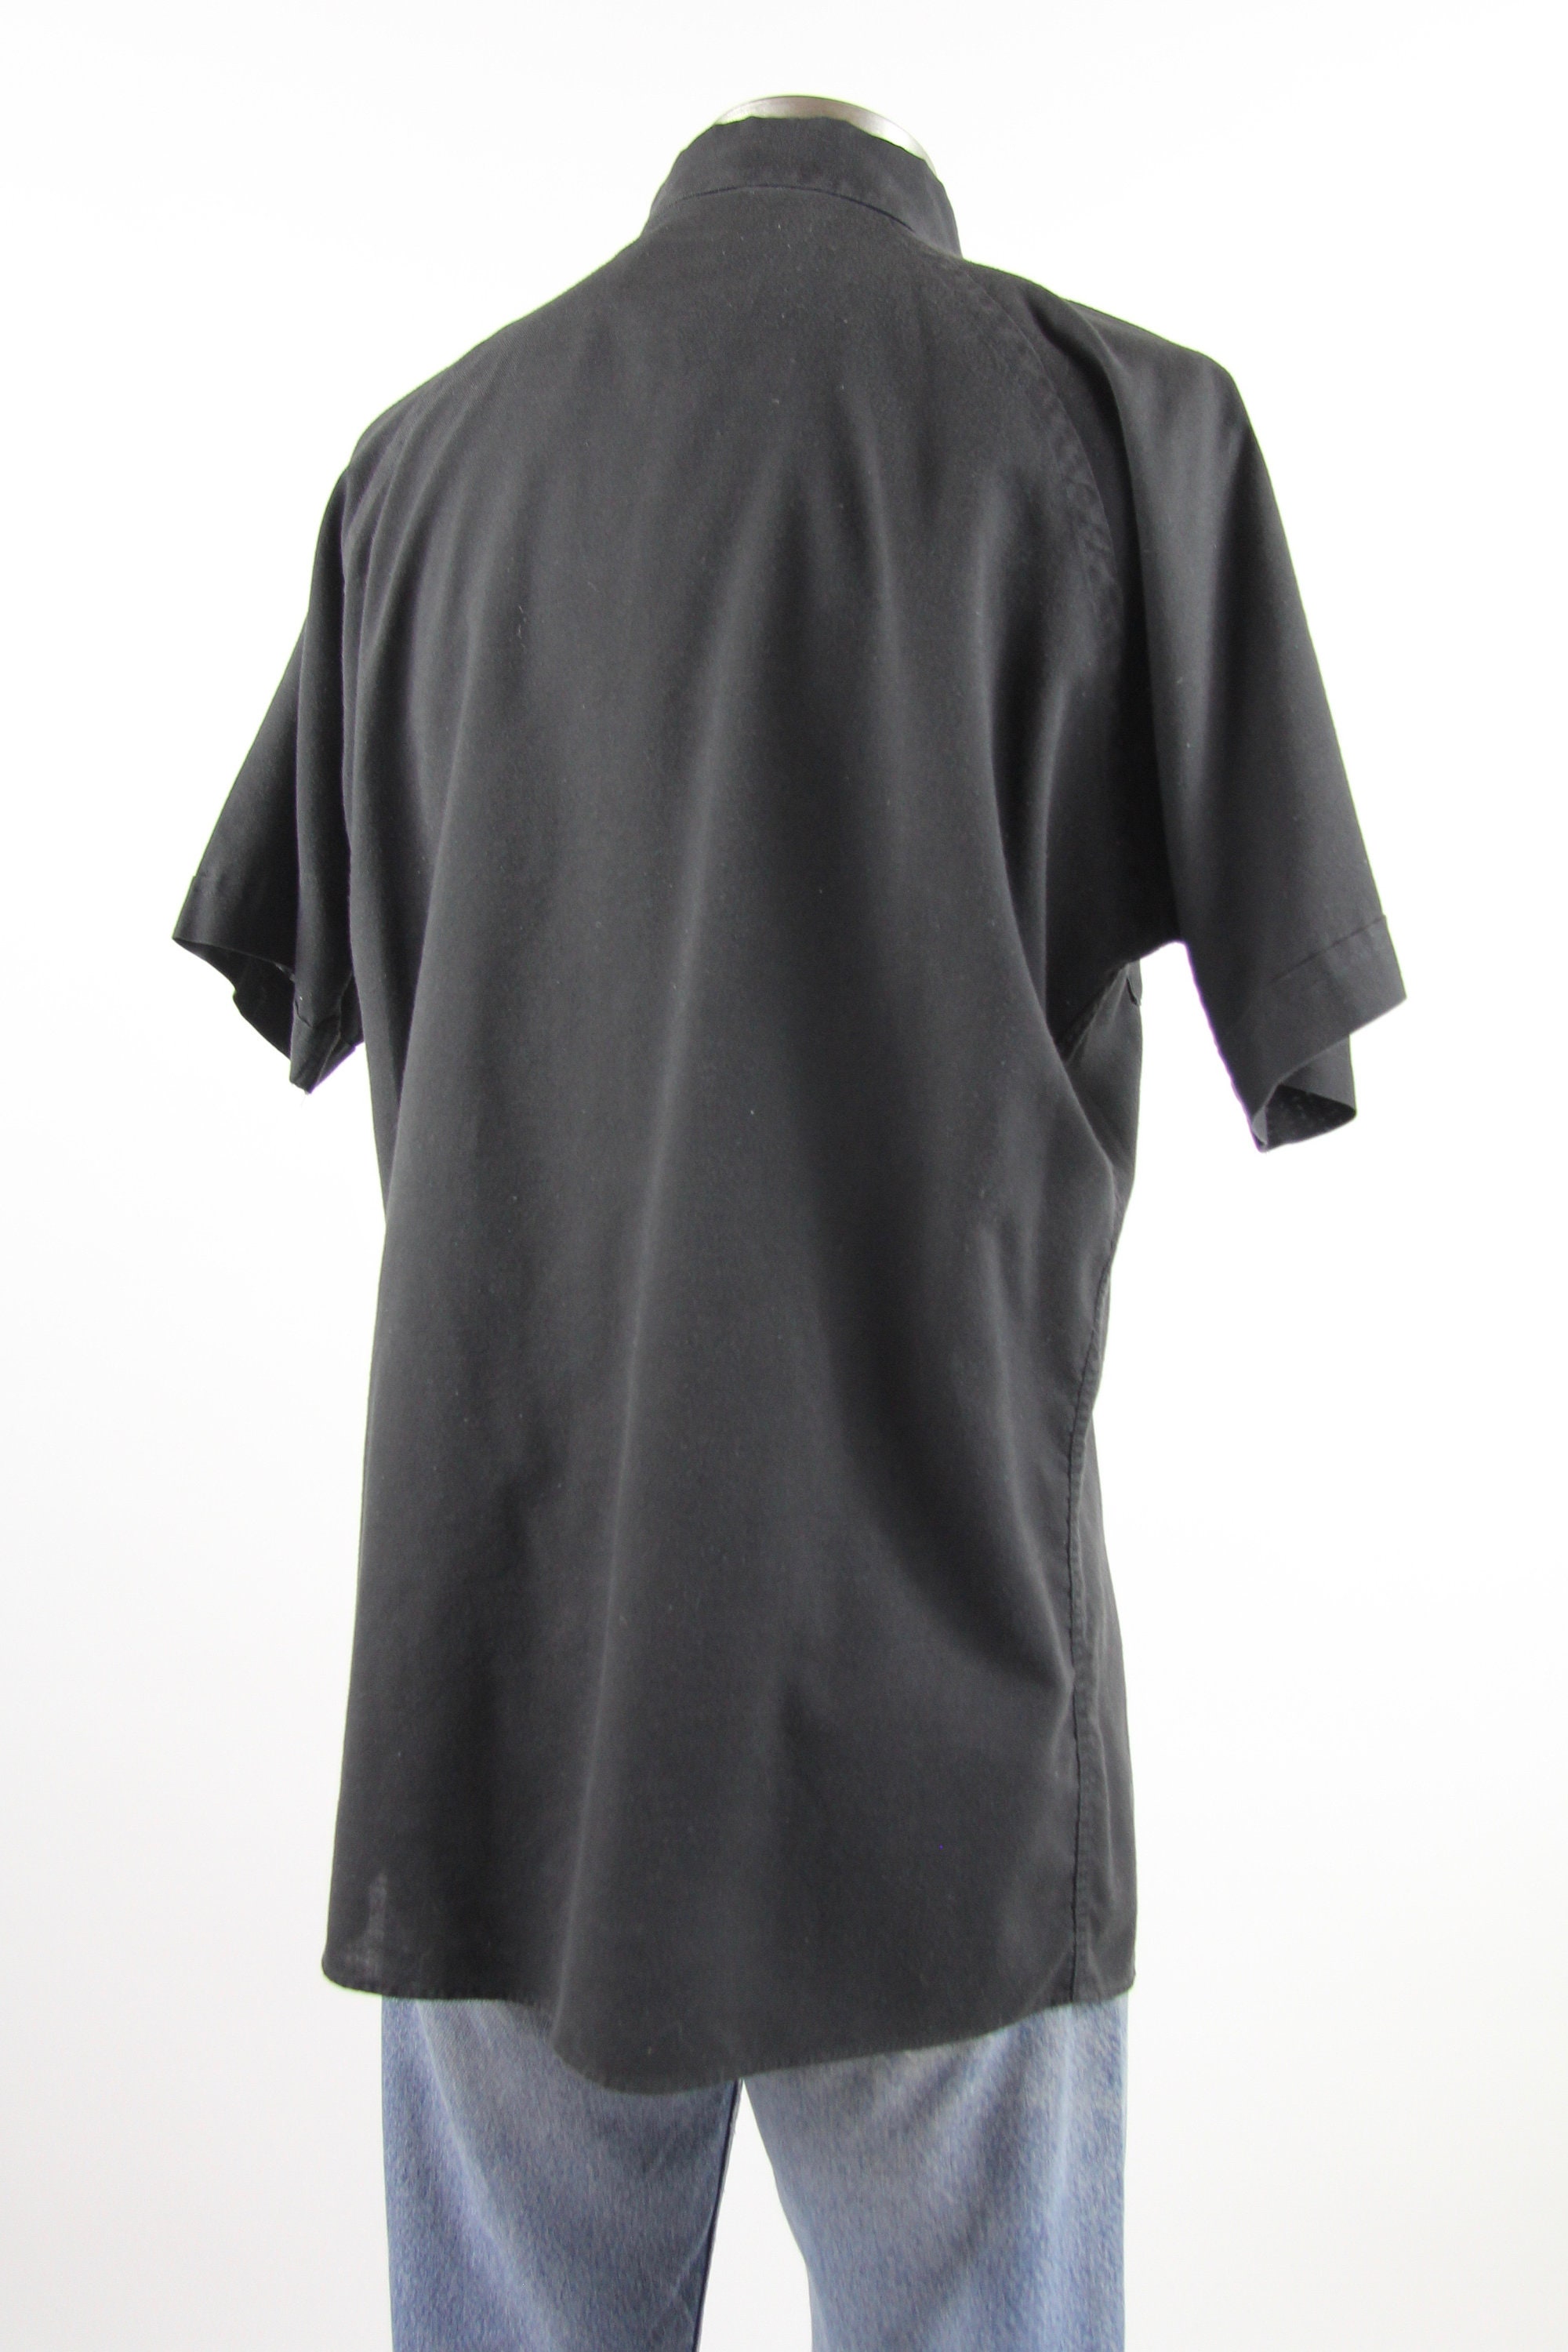 Priest's Black Shirt Vintage Clergy Shirt Men's Size Large